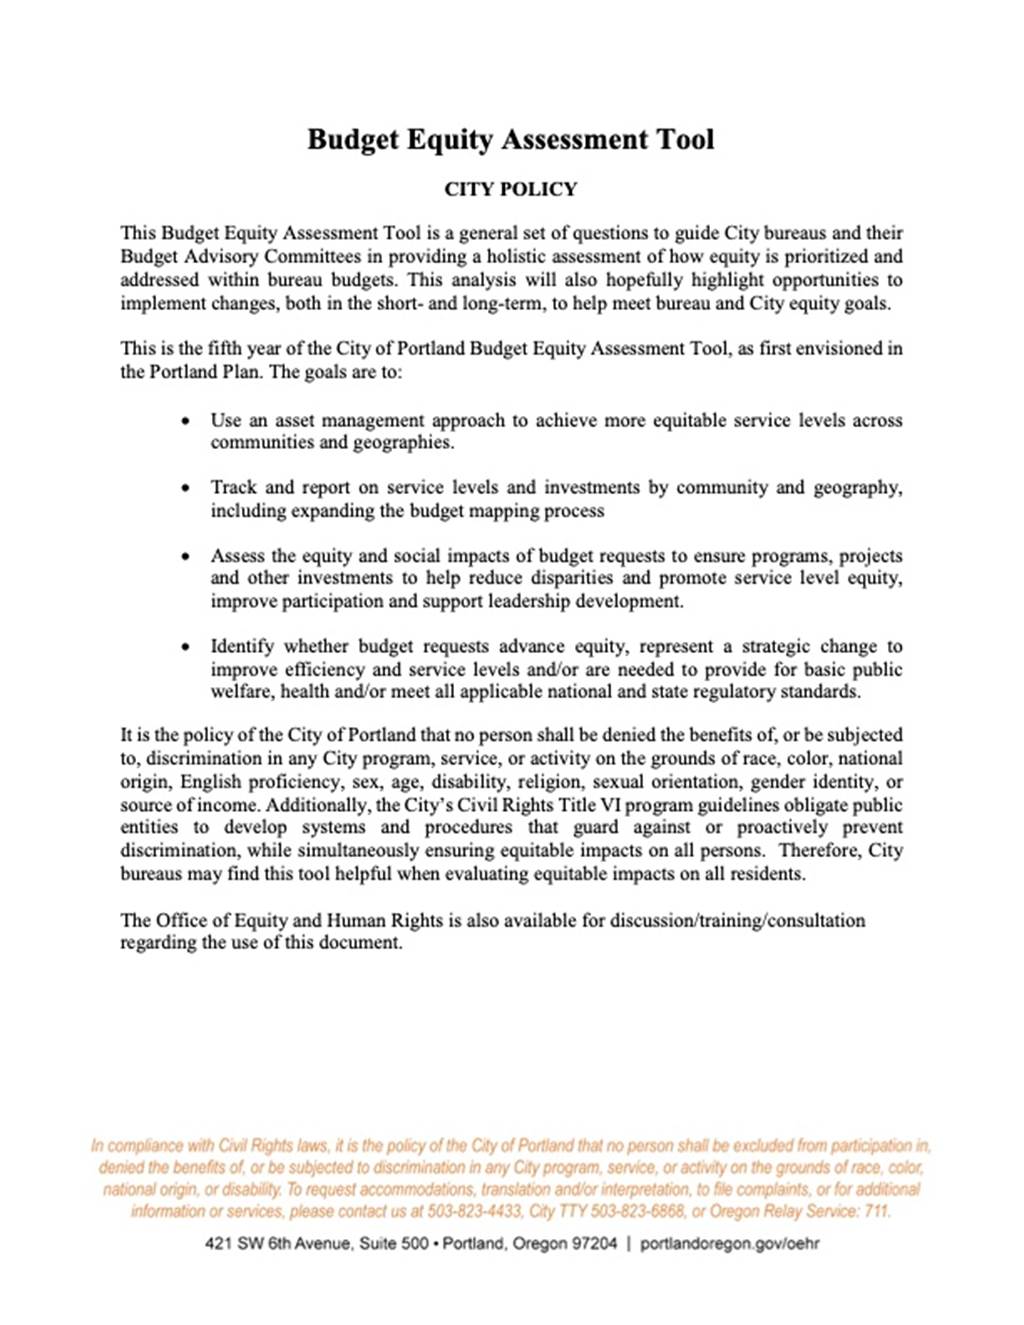 Portland Budget Equity Assessment Tool document image